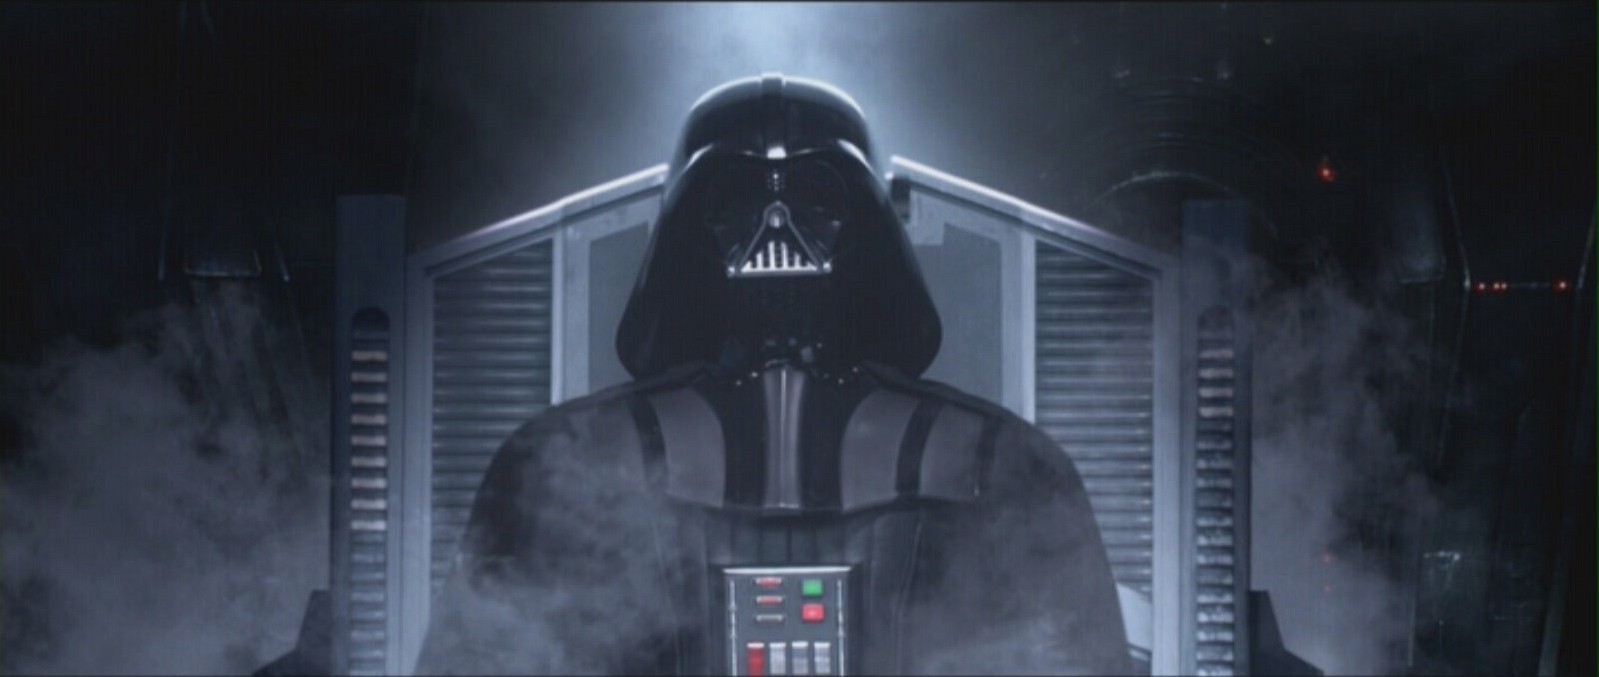 Star-Wars-Episode-III-Revenge-Of-The-Sith-Darth-Vader-darth-vader-18356684-1599-677.jpg